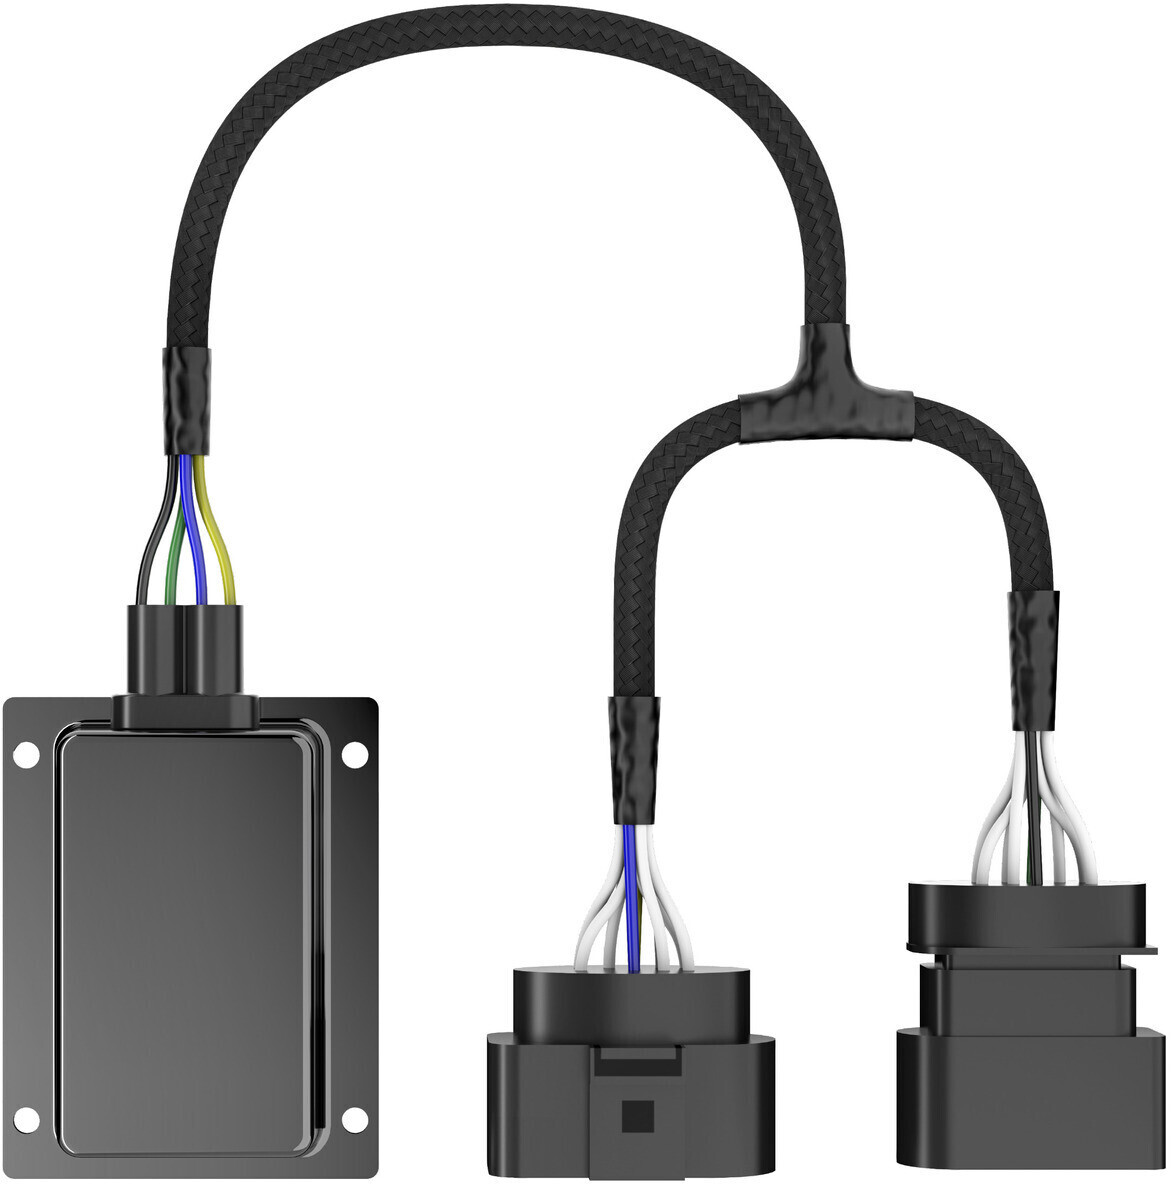 OSRAM LEDriving SMART CAN-Bus Adapter für H7 LED Module LEDSC01